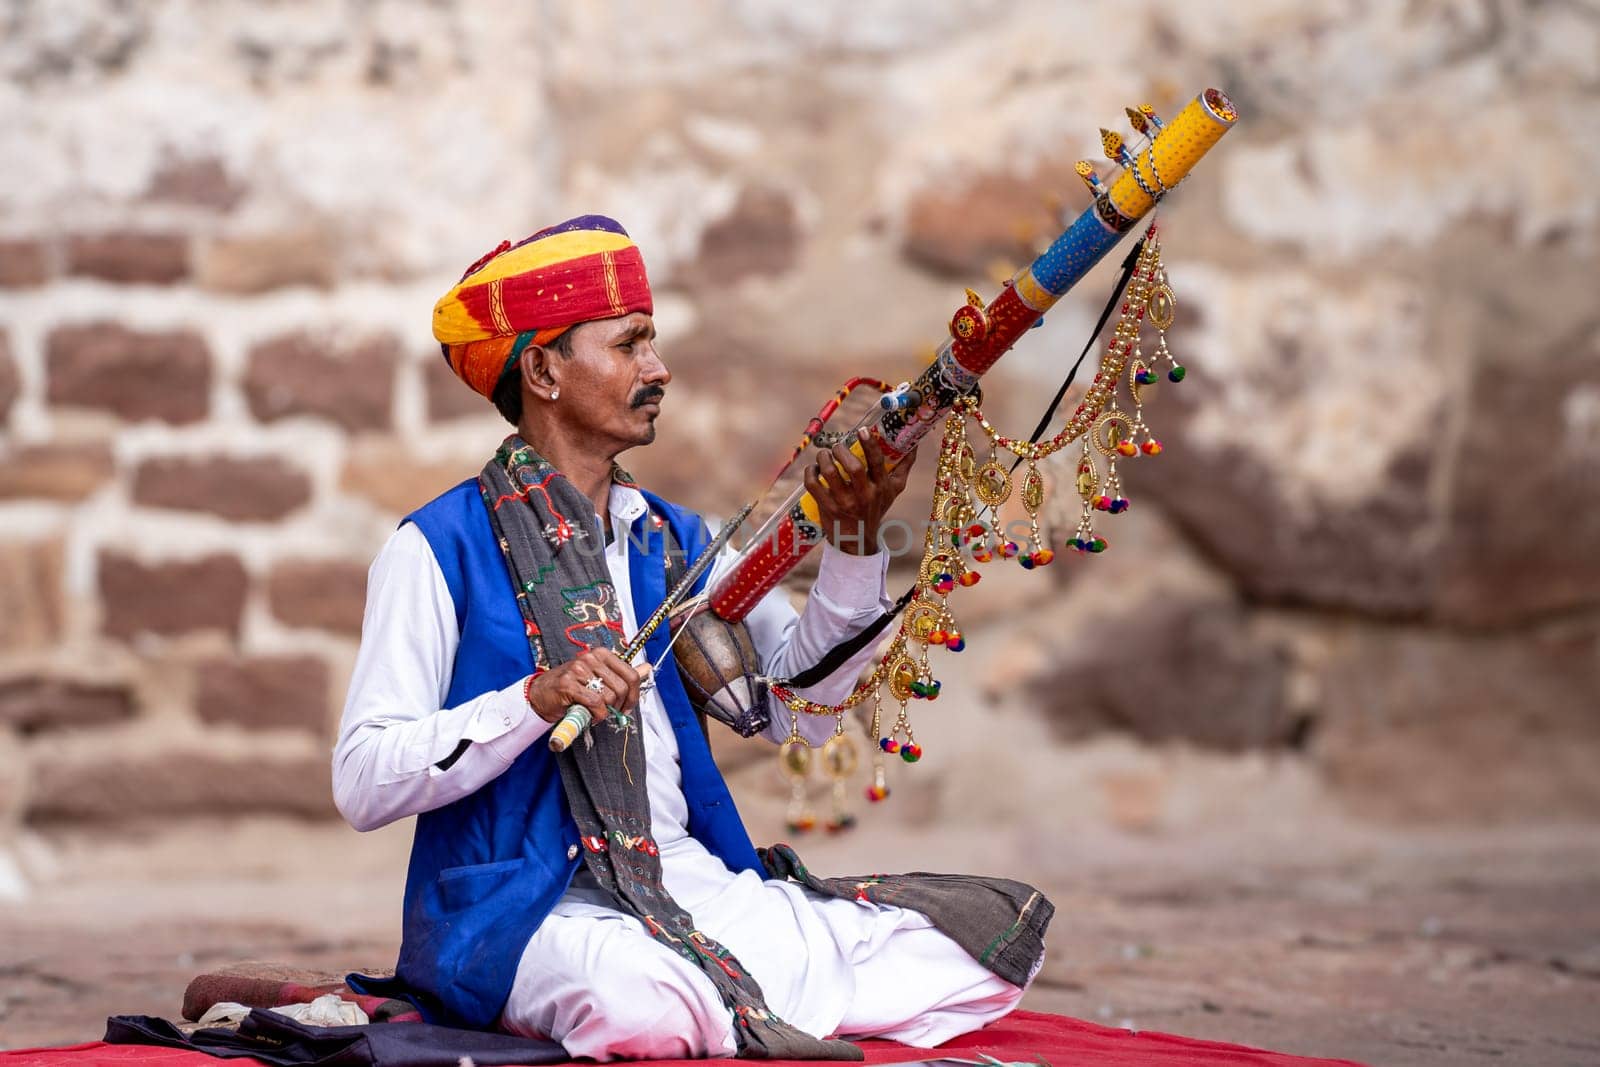 Jodhpur, Rajasthan, India - 26th Dec 2023: Rajasthani Indian musician sitting cross legged in colorful turban and white kurta pyjama local clothing in front of a brick wall at a mahal palace